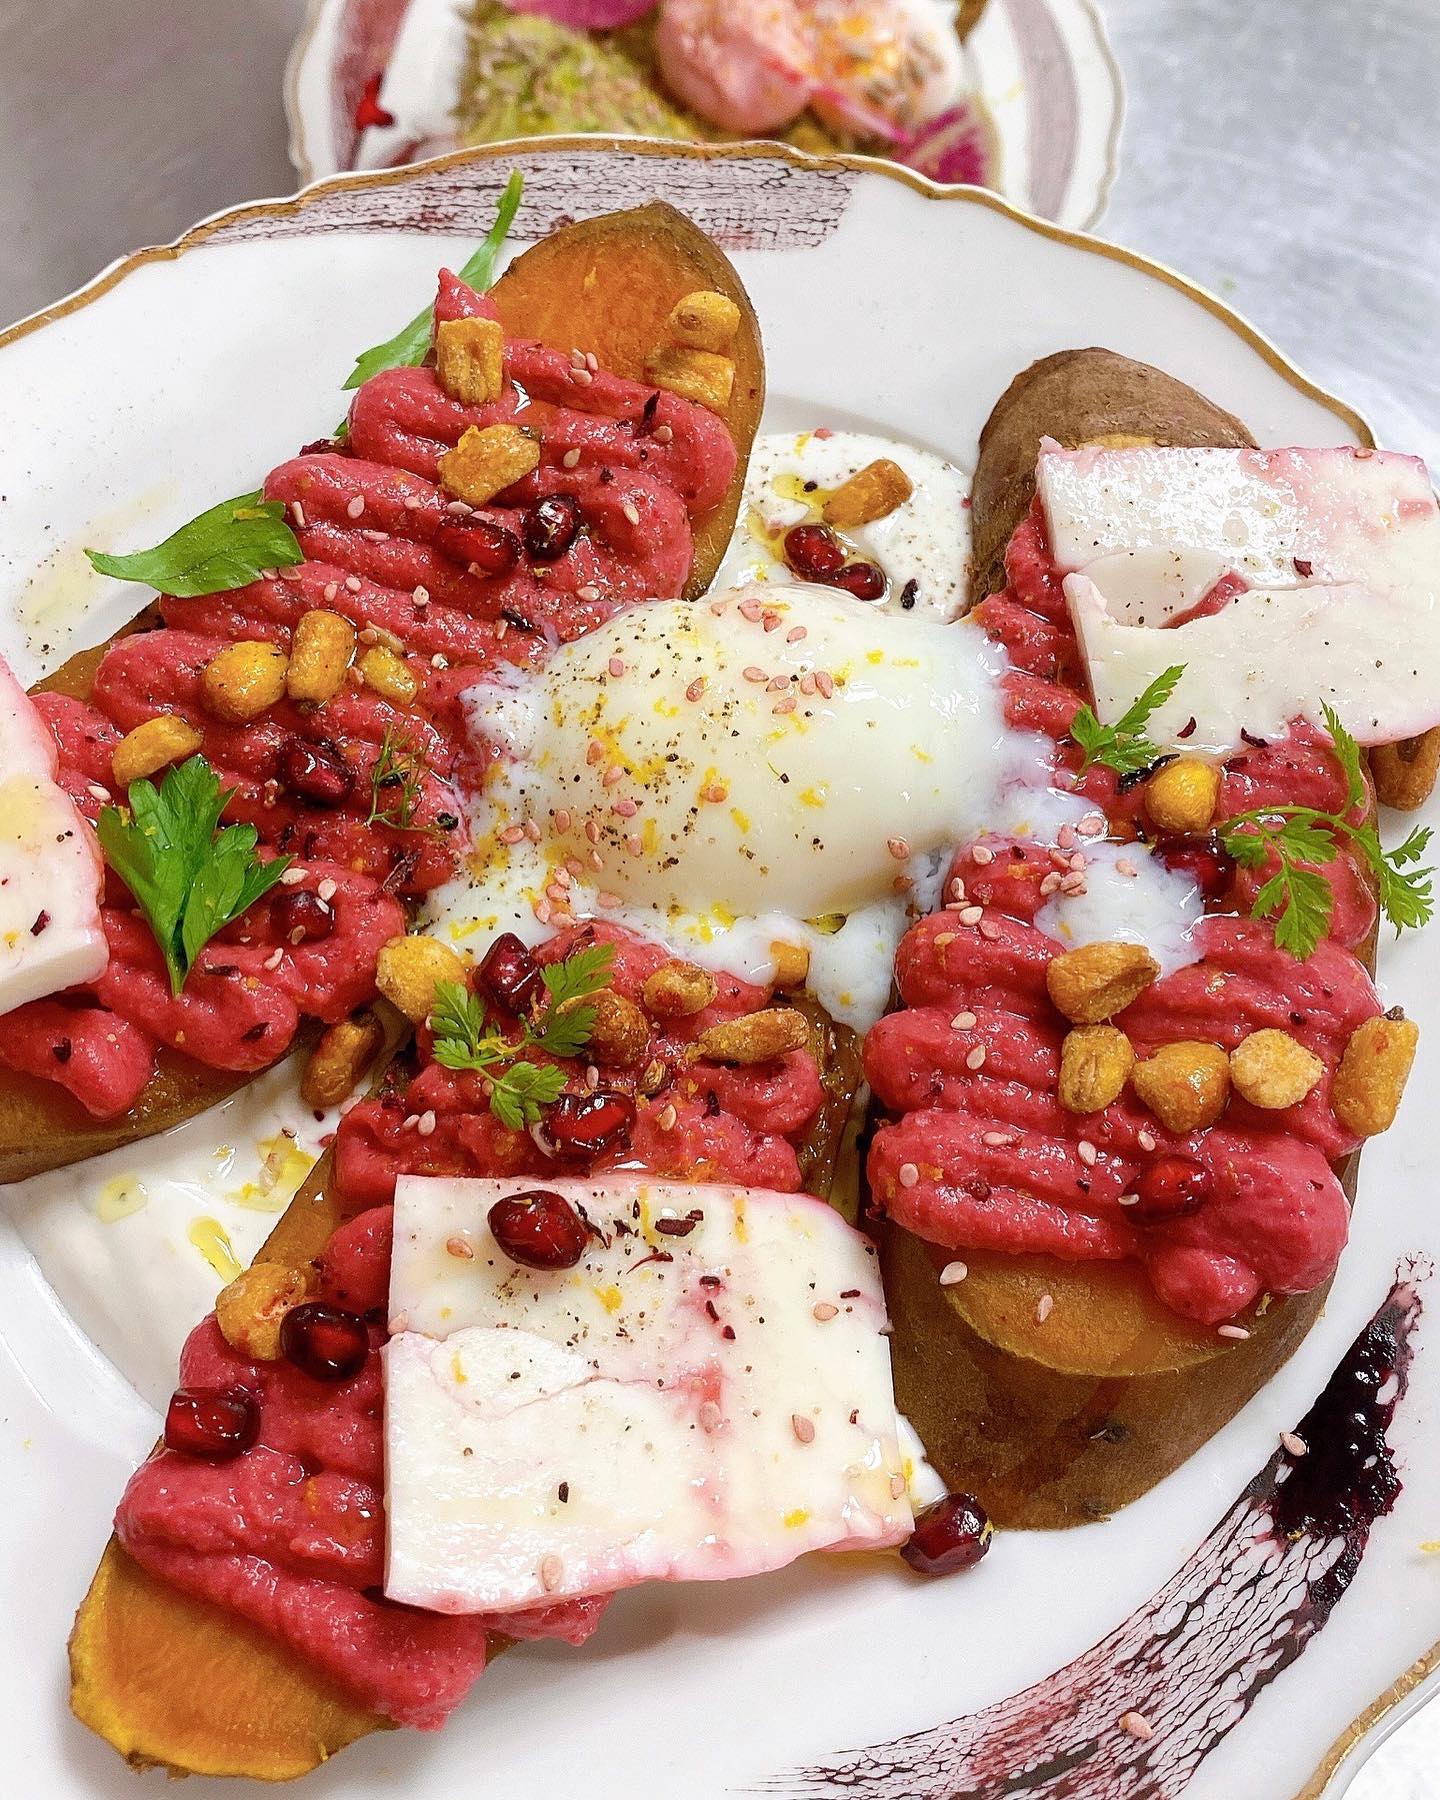 Fuchsia Lyon – Cuisine de couleurs